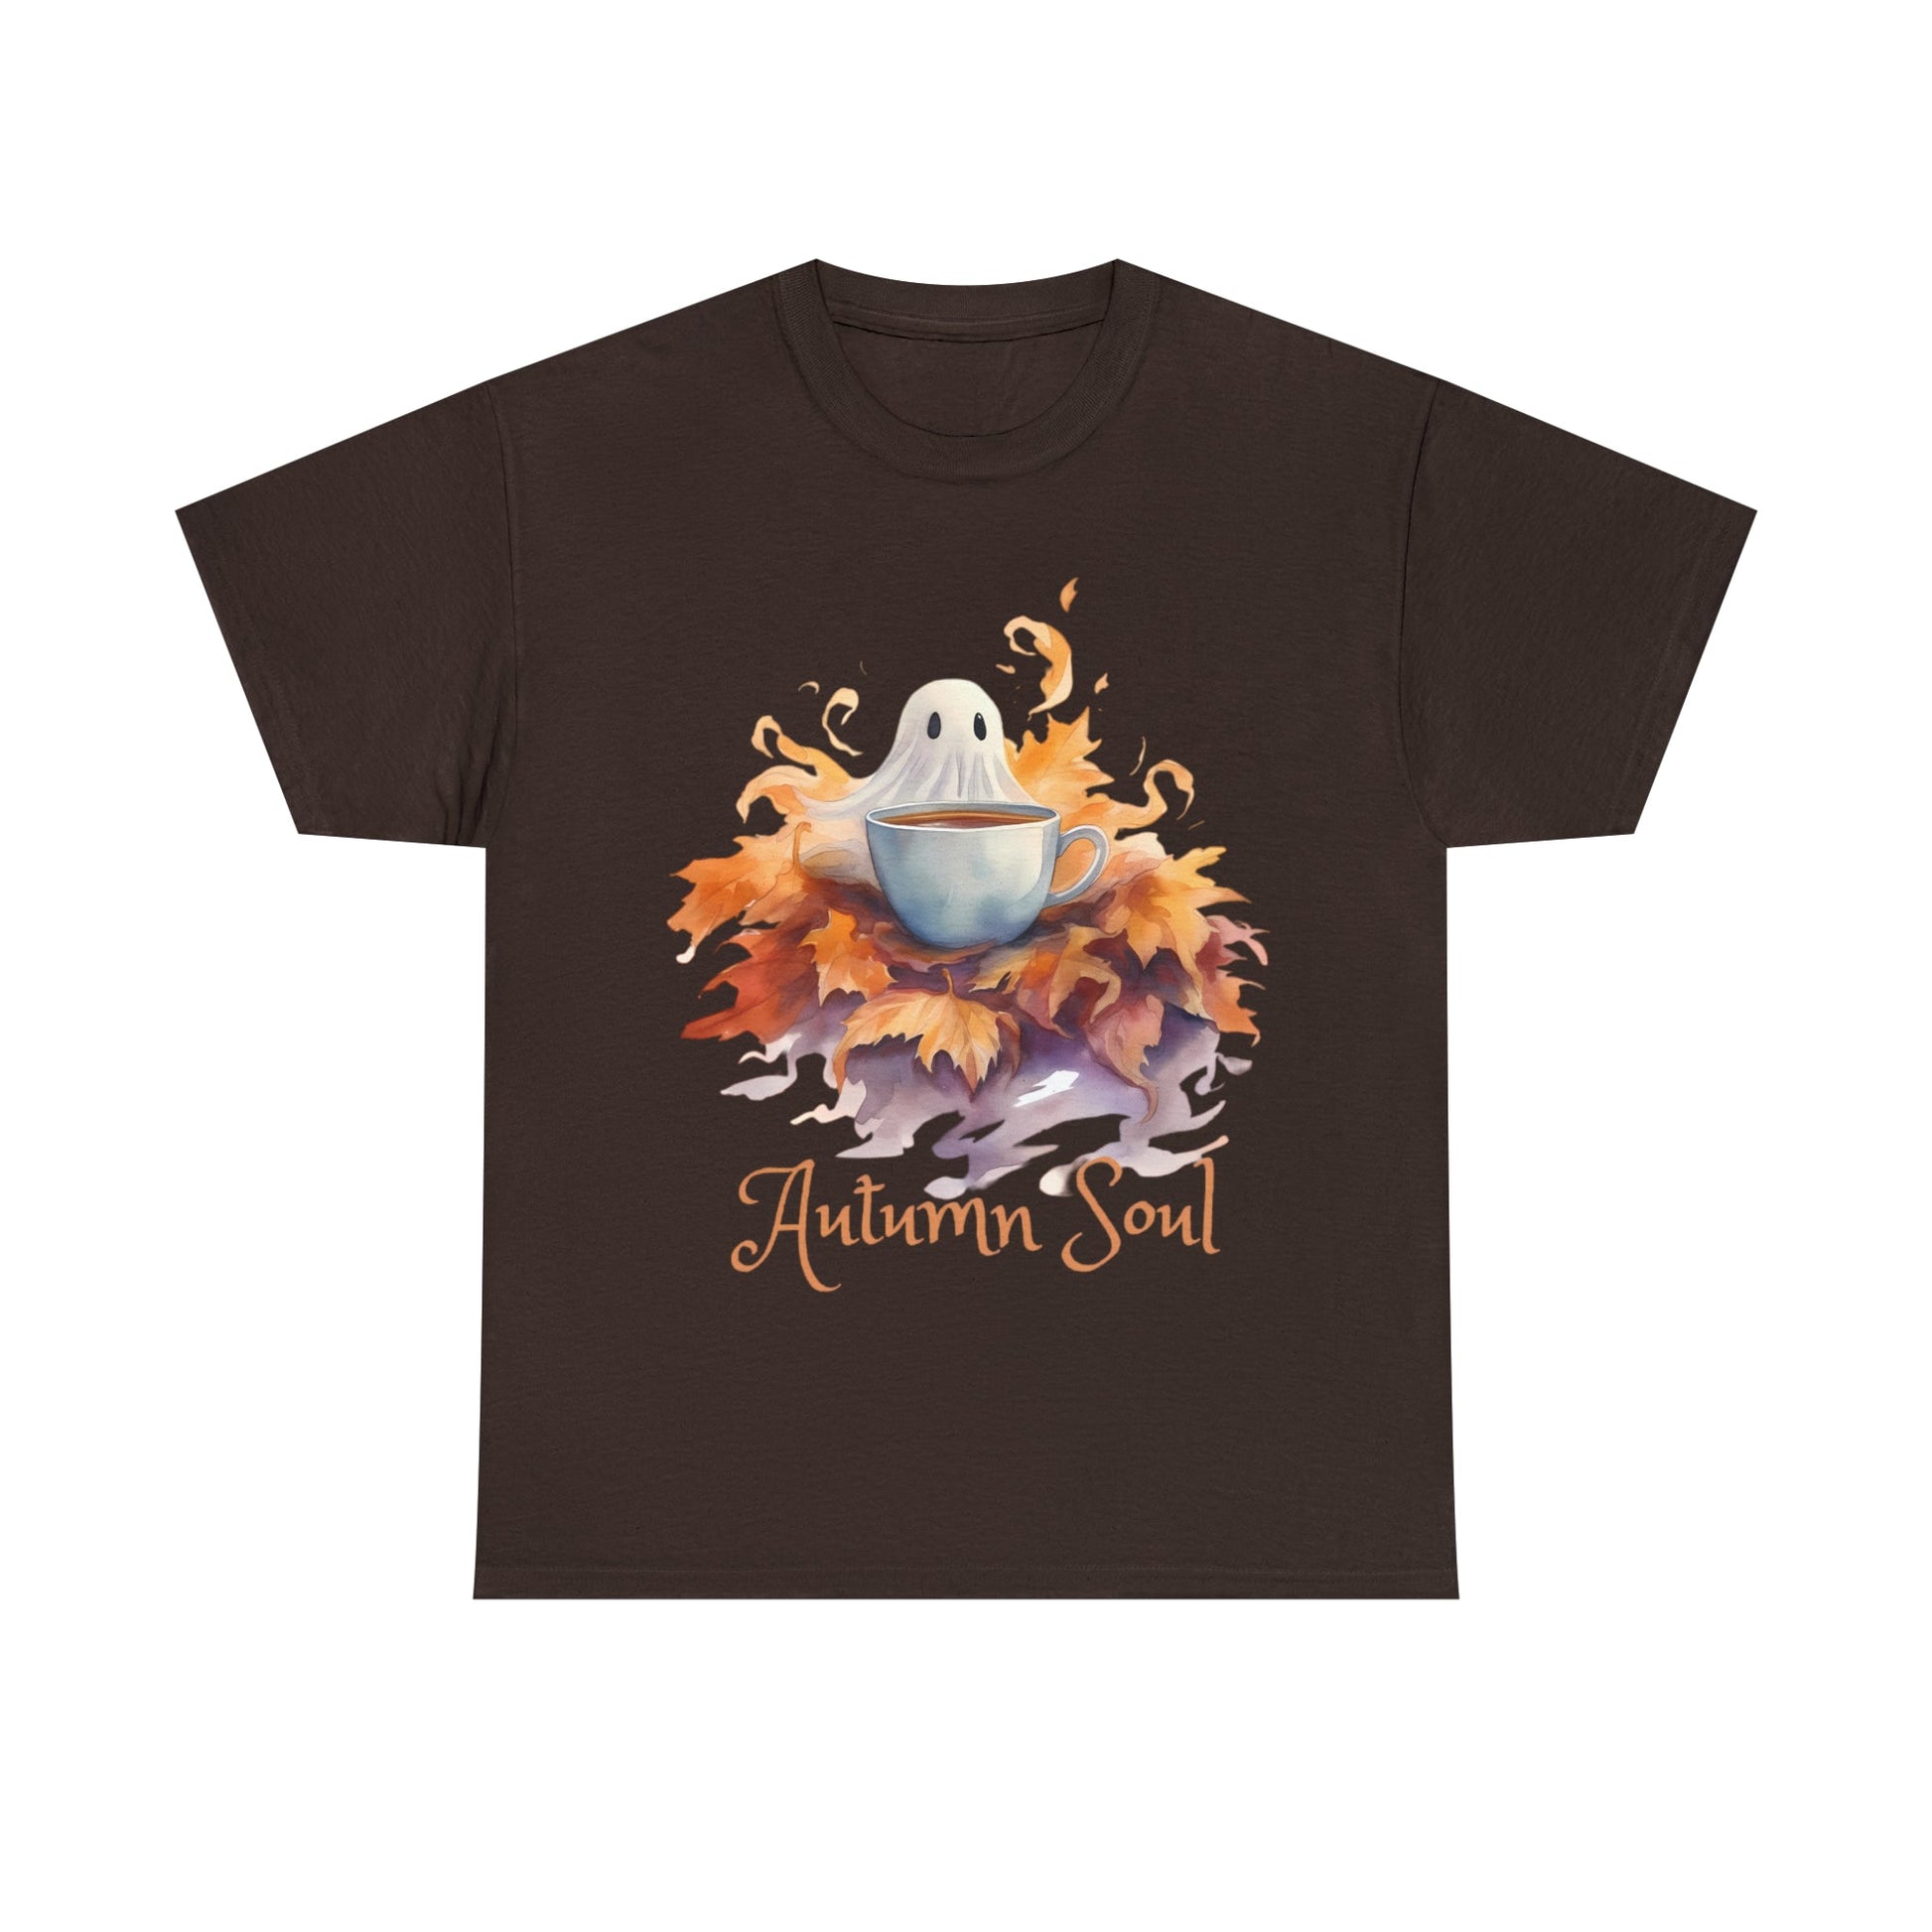 Autumn Soul Cute Ghost in Pile of Leaves Tee ShirtT - ShirtVTZdesignsDark ChocolateScoffeeCrew neckDTG